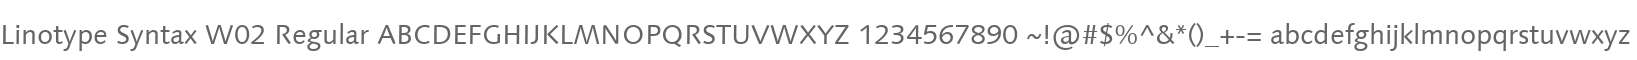 Linotype Syntax W02 Regular